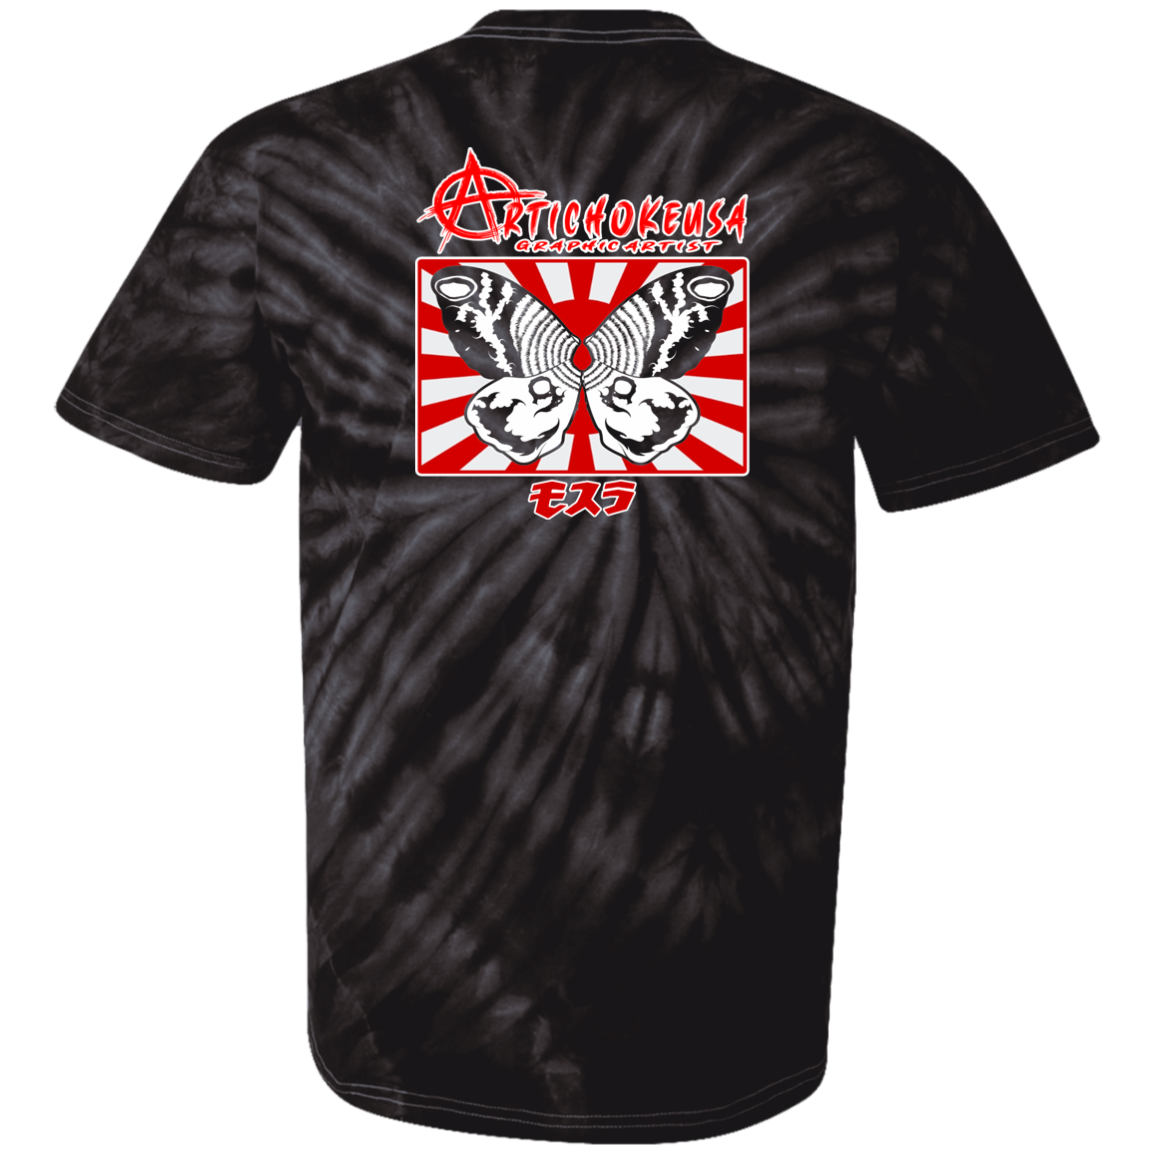 ArtichokeUSA Character and Font design. Shobijin (Twins)/Mothra Fan Art . Let's Create Your Own Design Today. 100% Cotton Tie Dye T-Shirt